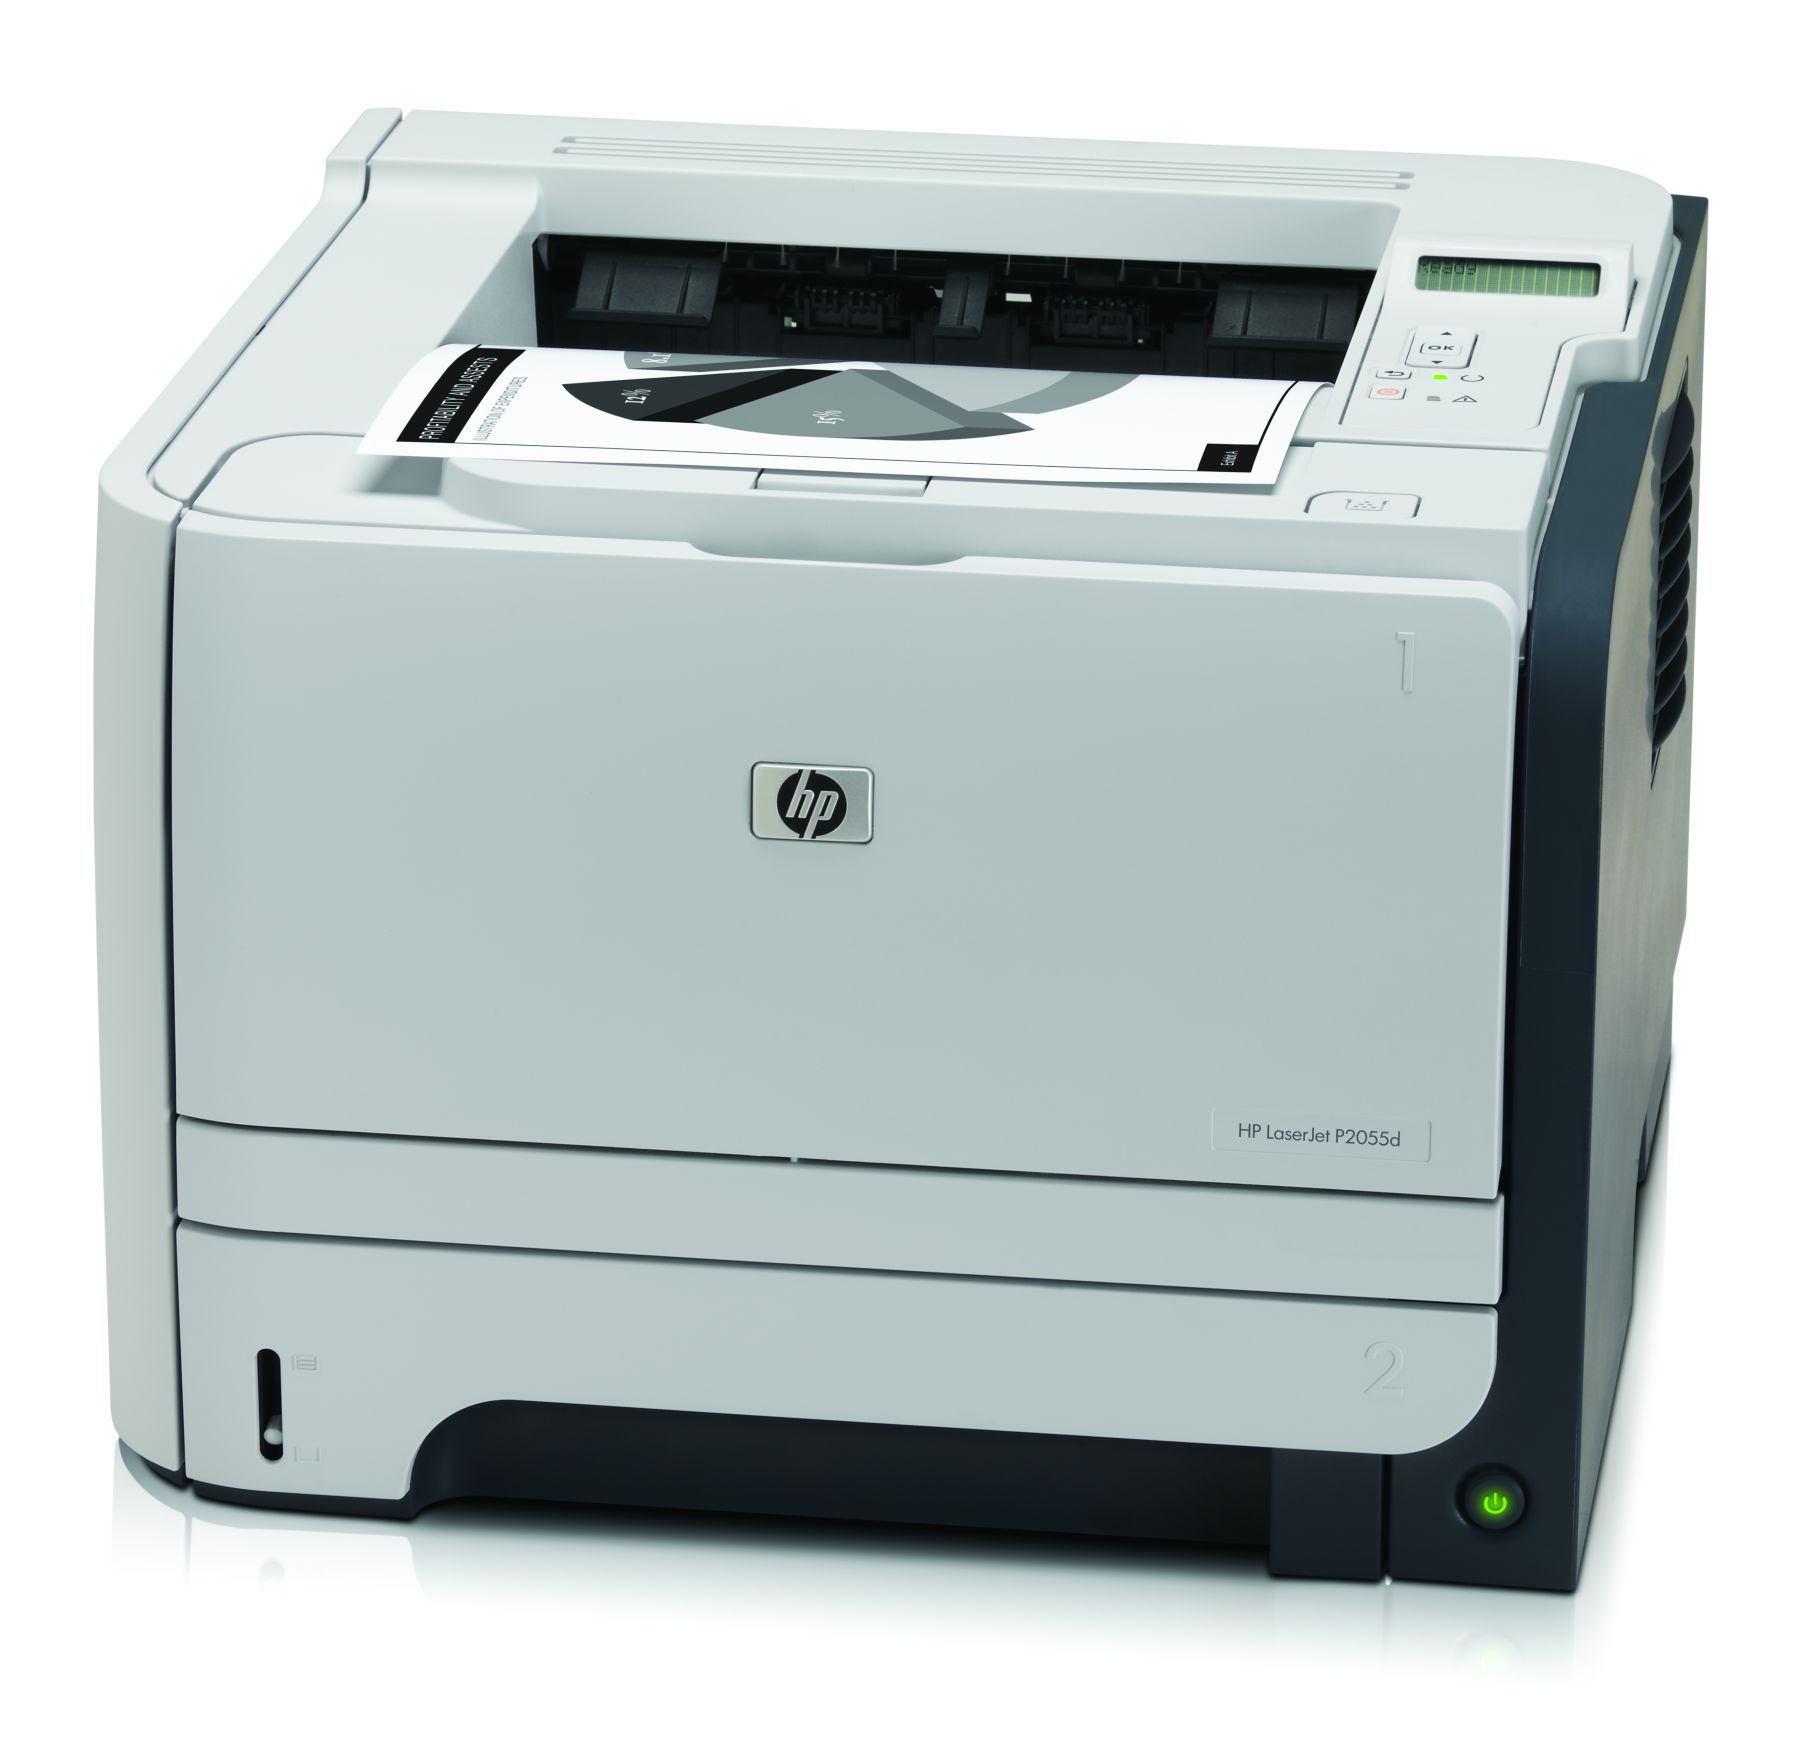 price of hp laserjet p2055dn printer